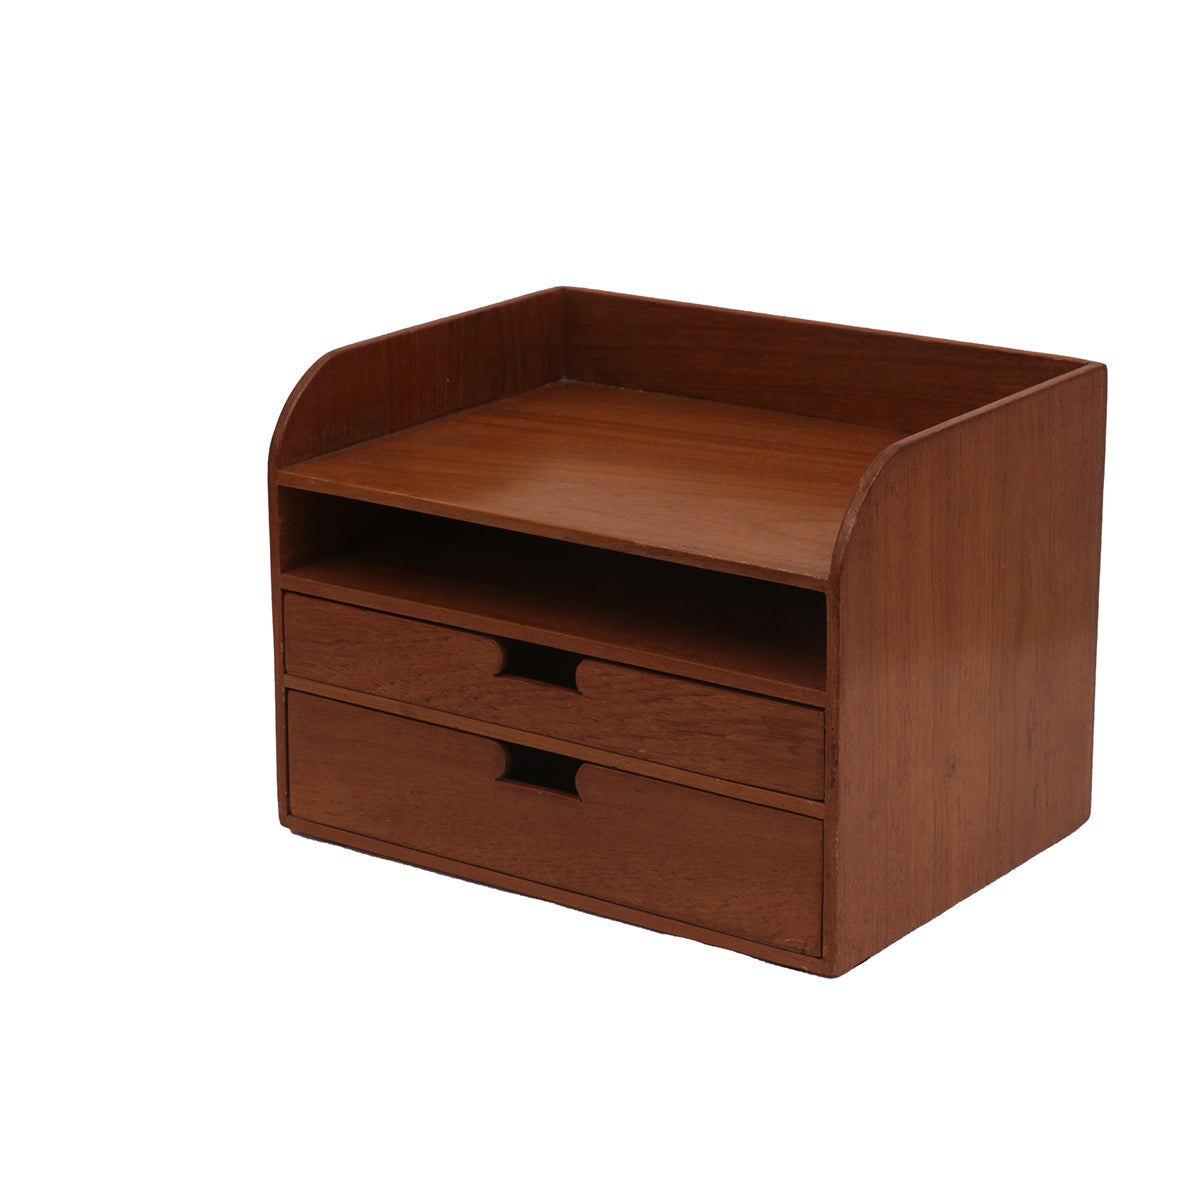 Wooden Office Desk Organizer (Natural Tone) Desk Organizer